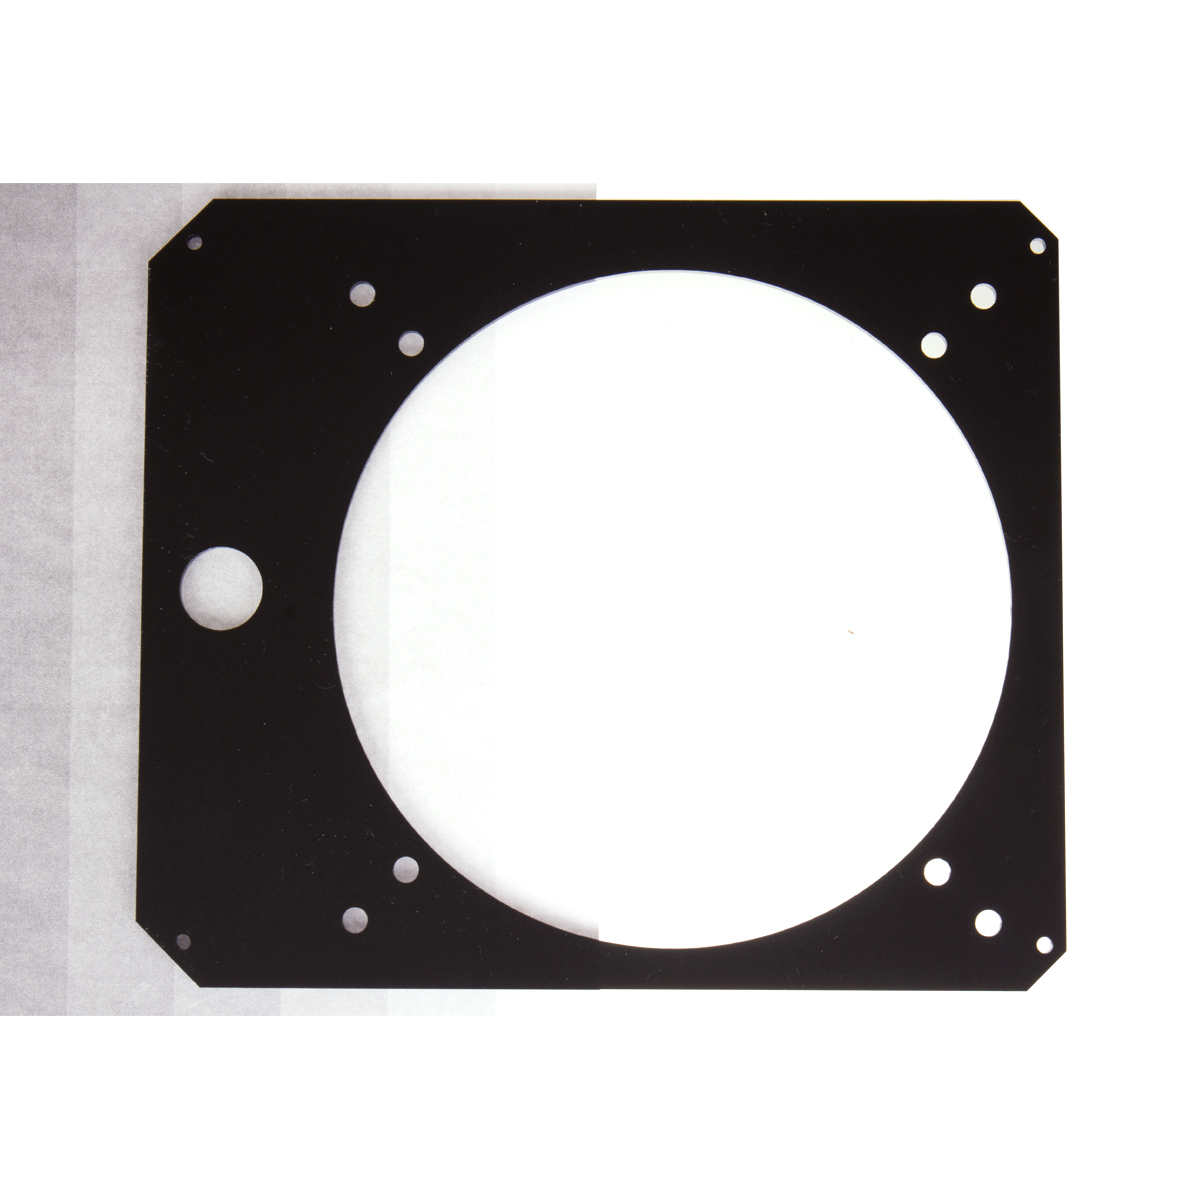 Lazer3D - Lazer3D LZ7 Right Panel (16mm Vandal) - Midnight Black Open